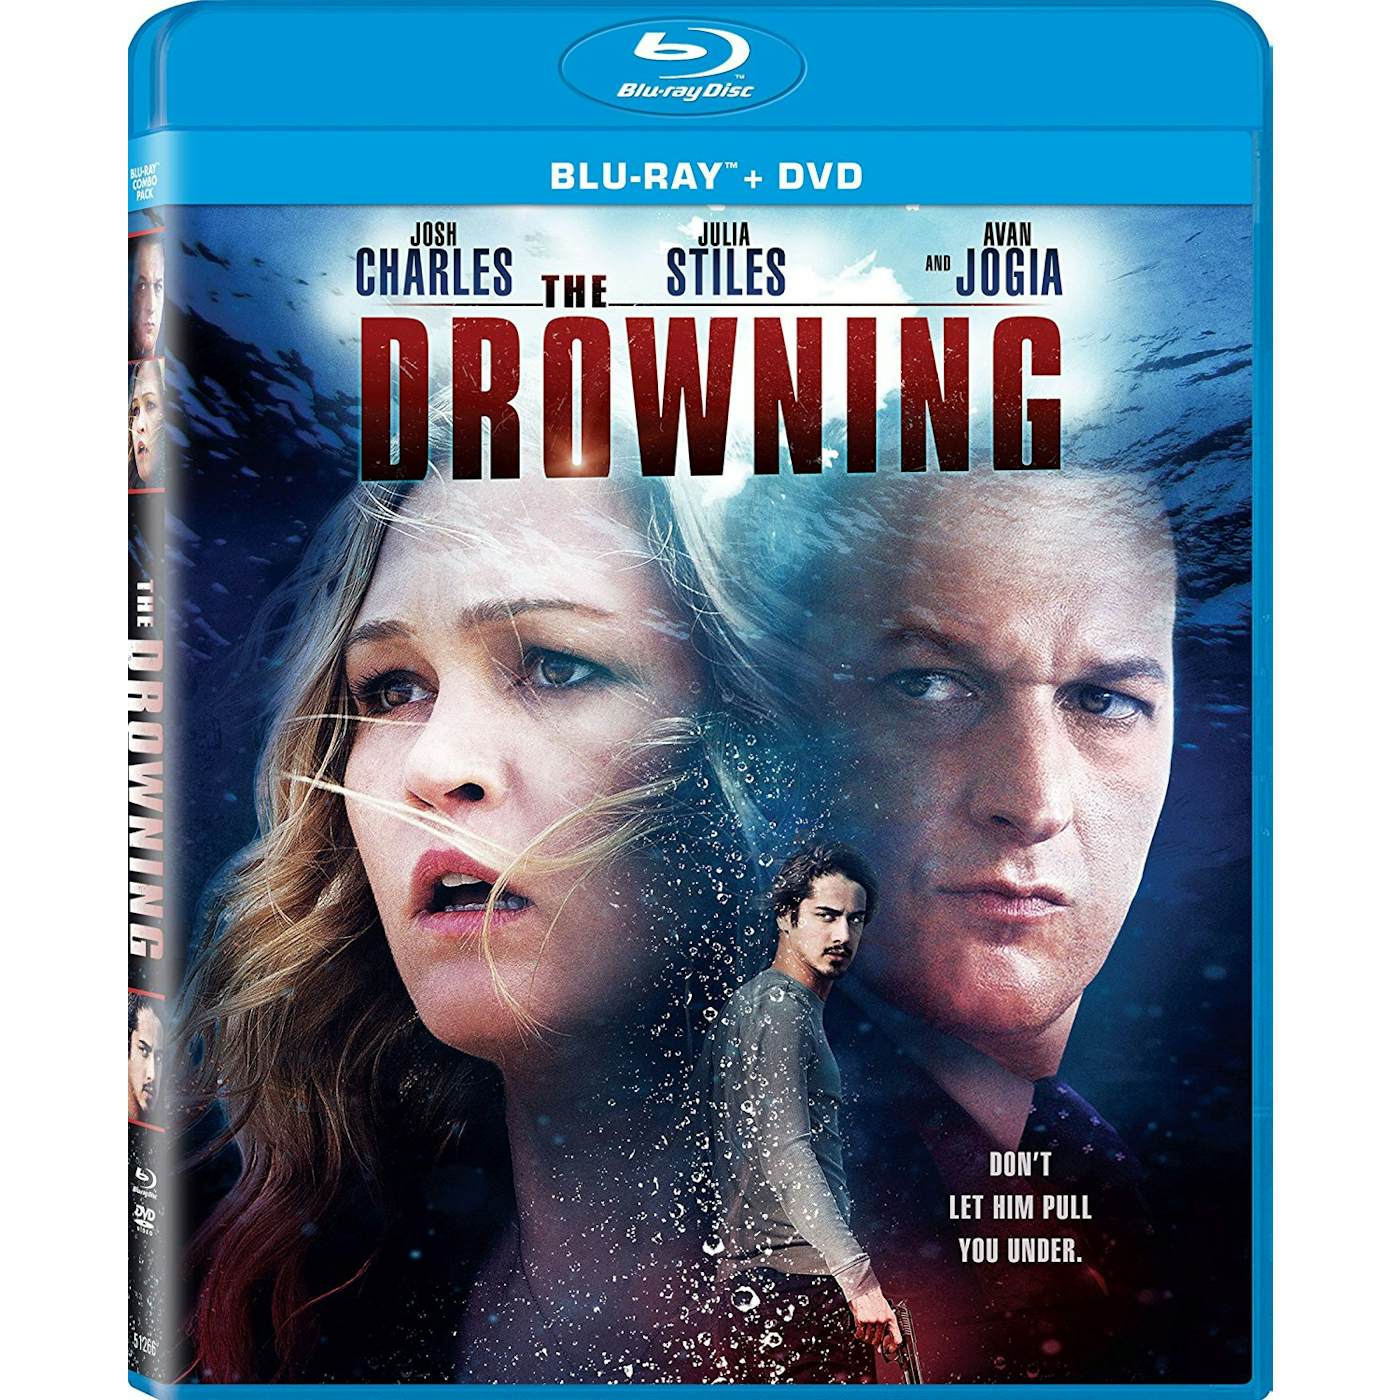 DROWNING (2017) Blu-ray